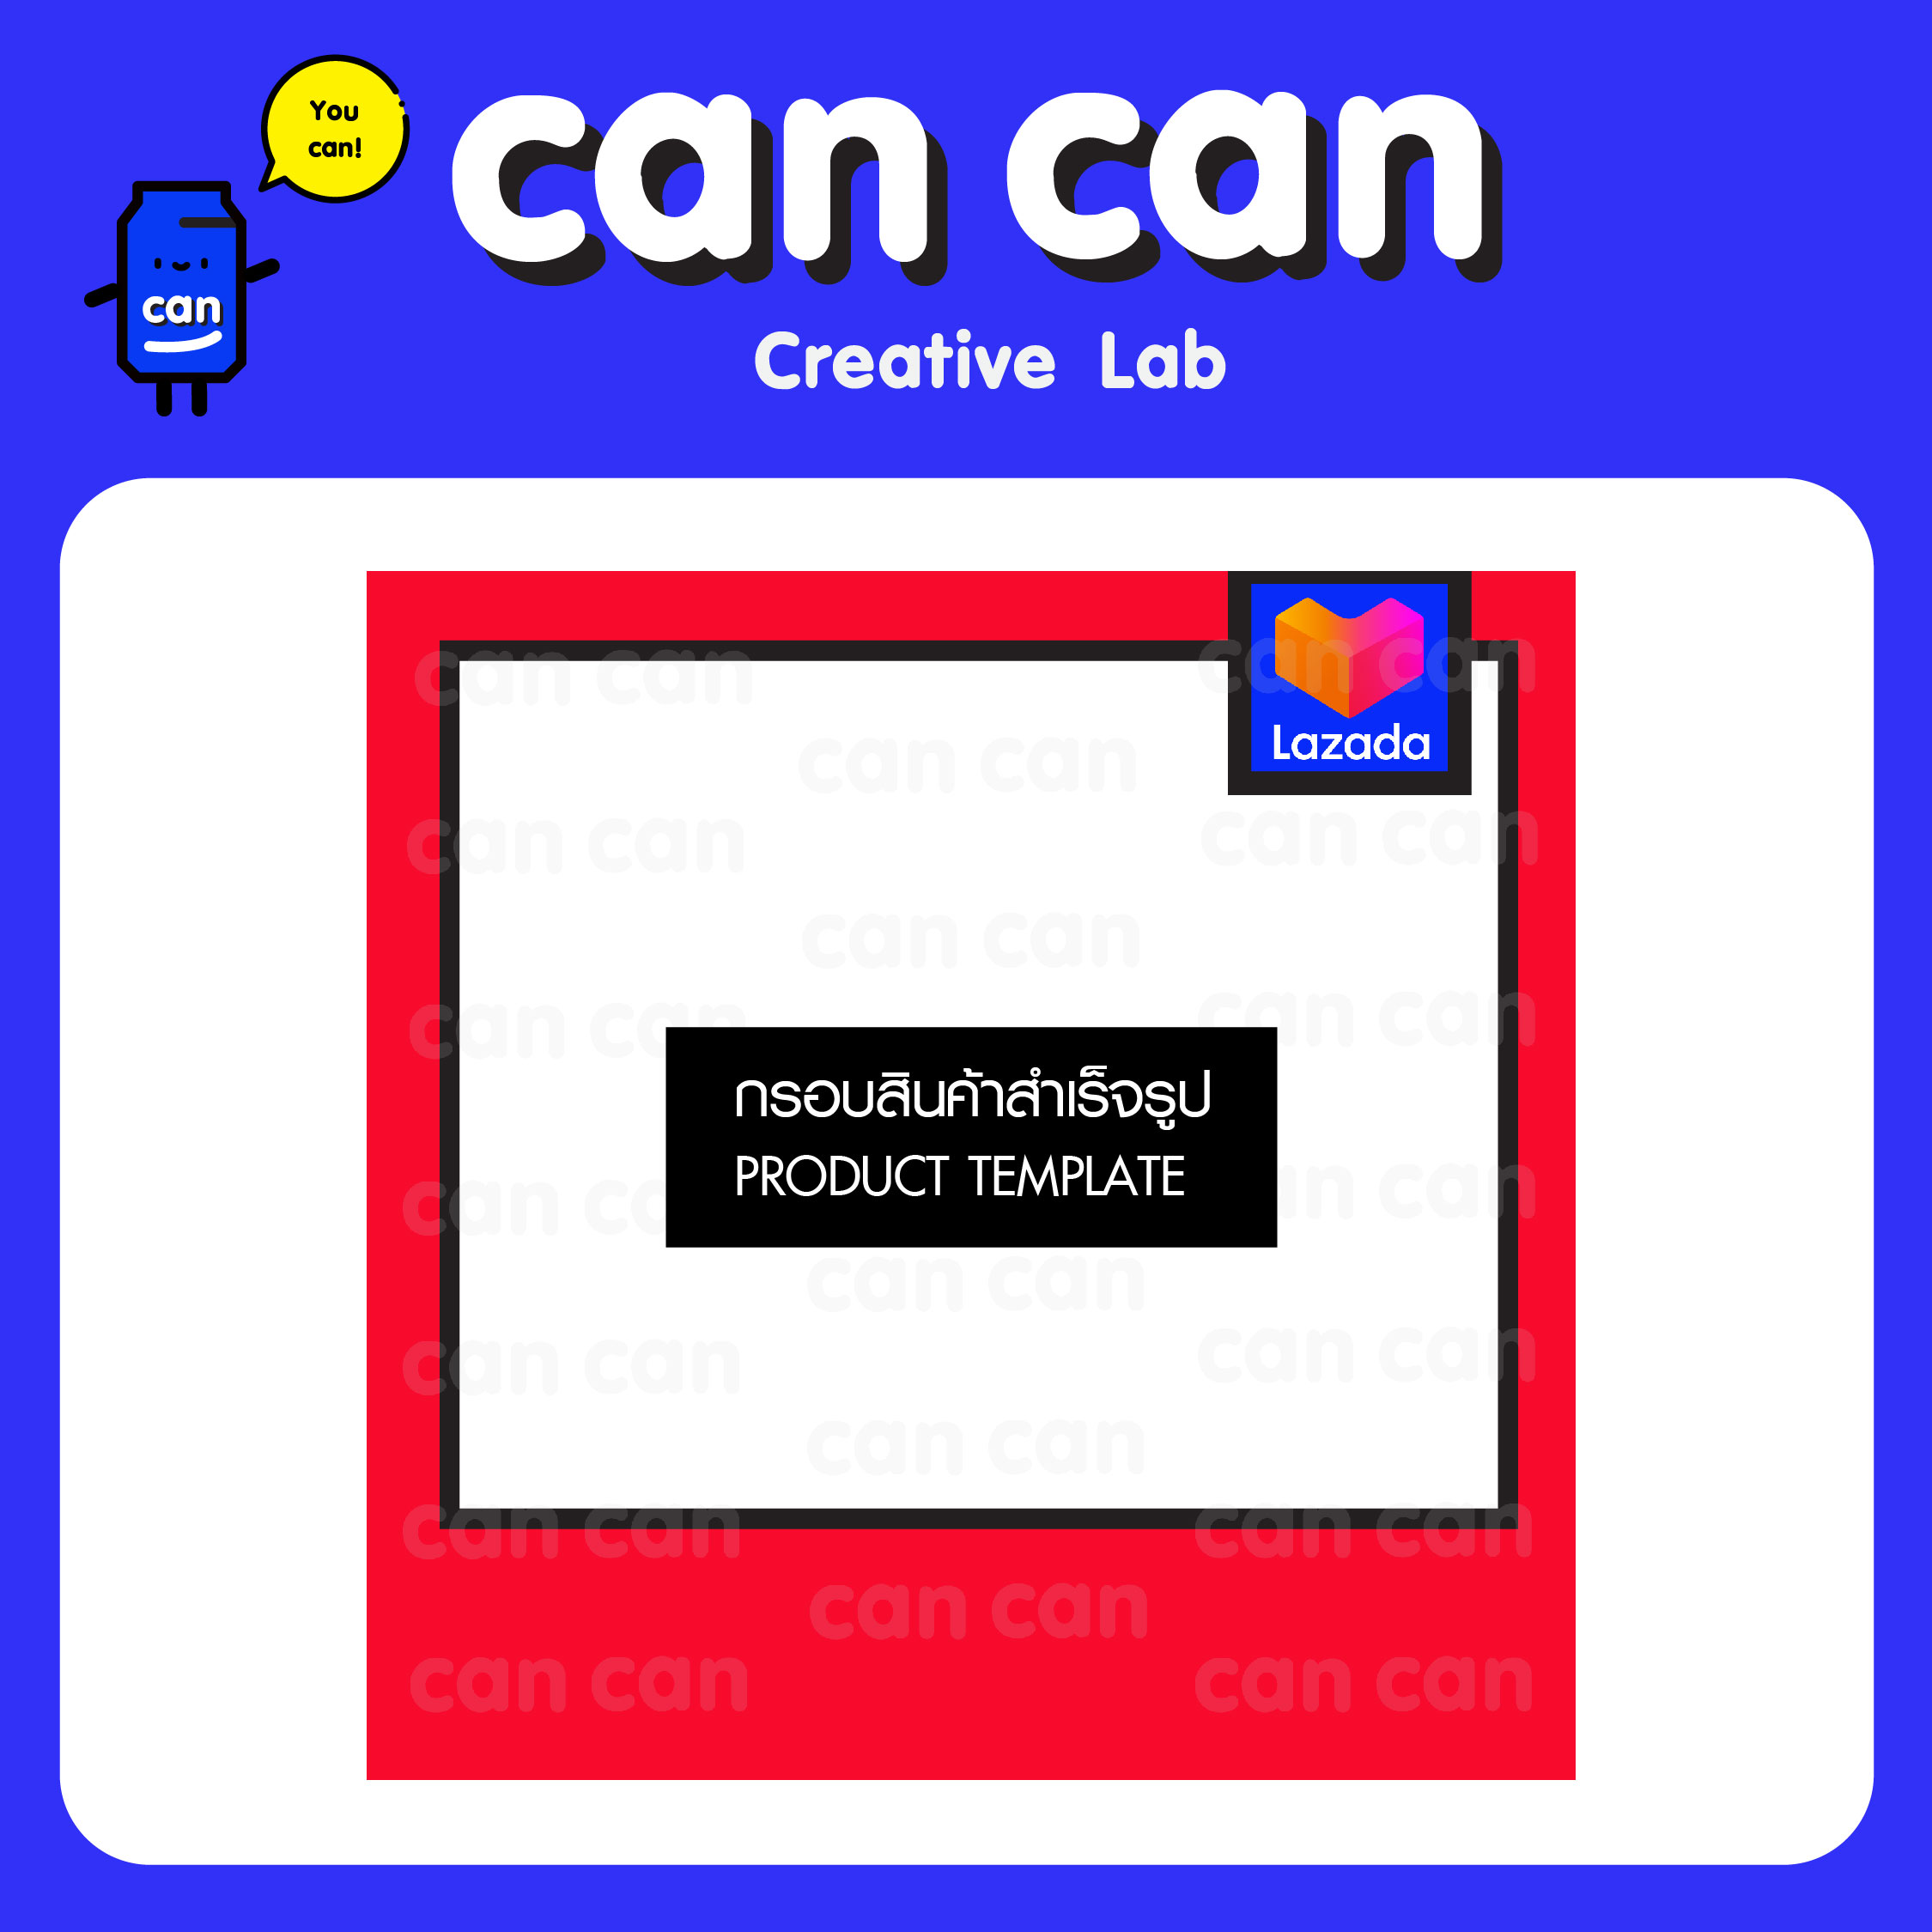 CanCan Creative Lab - กรอบสินค้าสำเร็จรูป Product Template ราคาพิเศษ  (จัดส่งทางอีเมลหรือแชท)